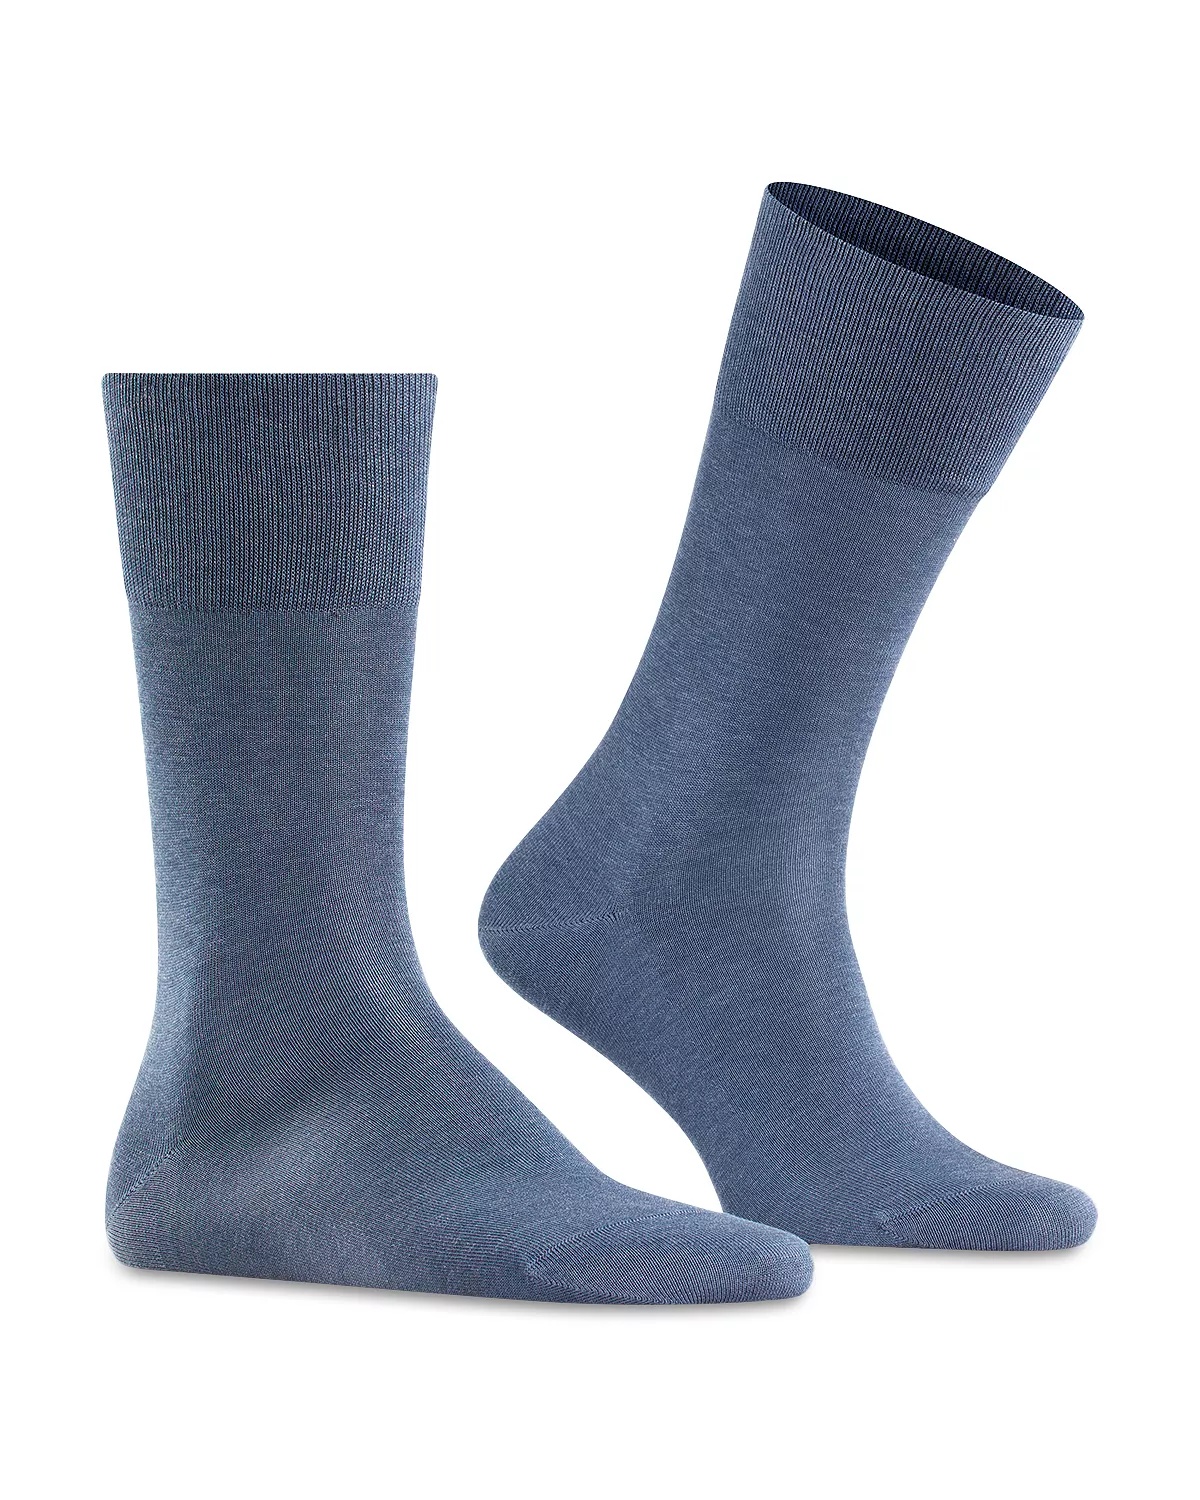 Tiago Cotton Blend Socks - 2